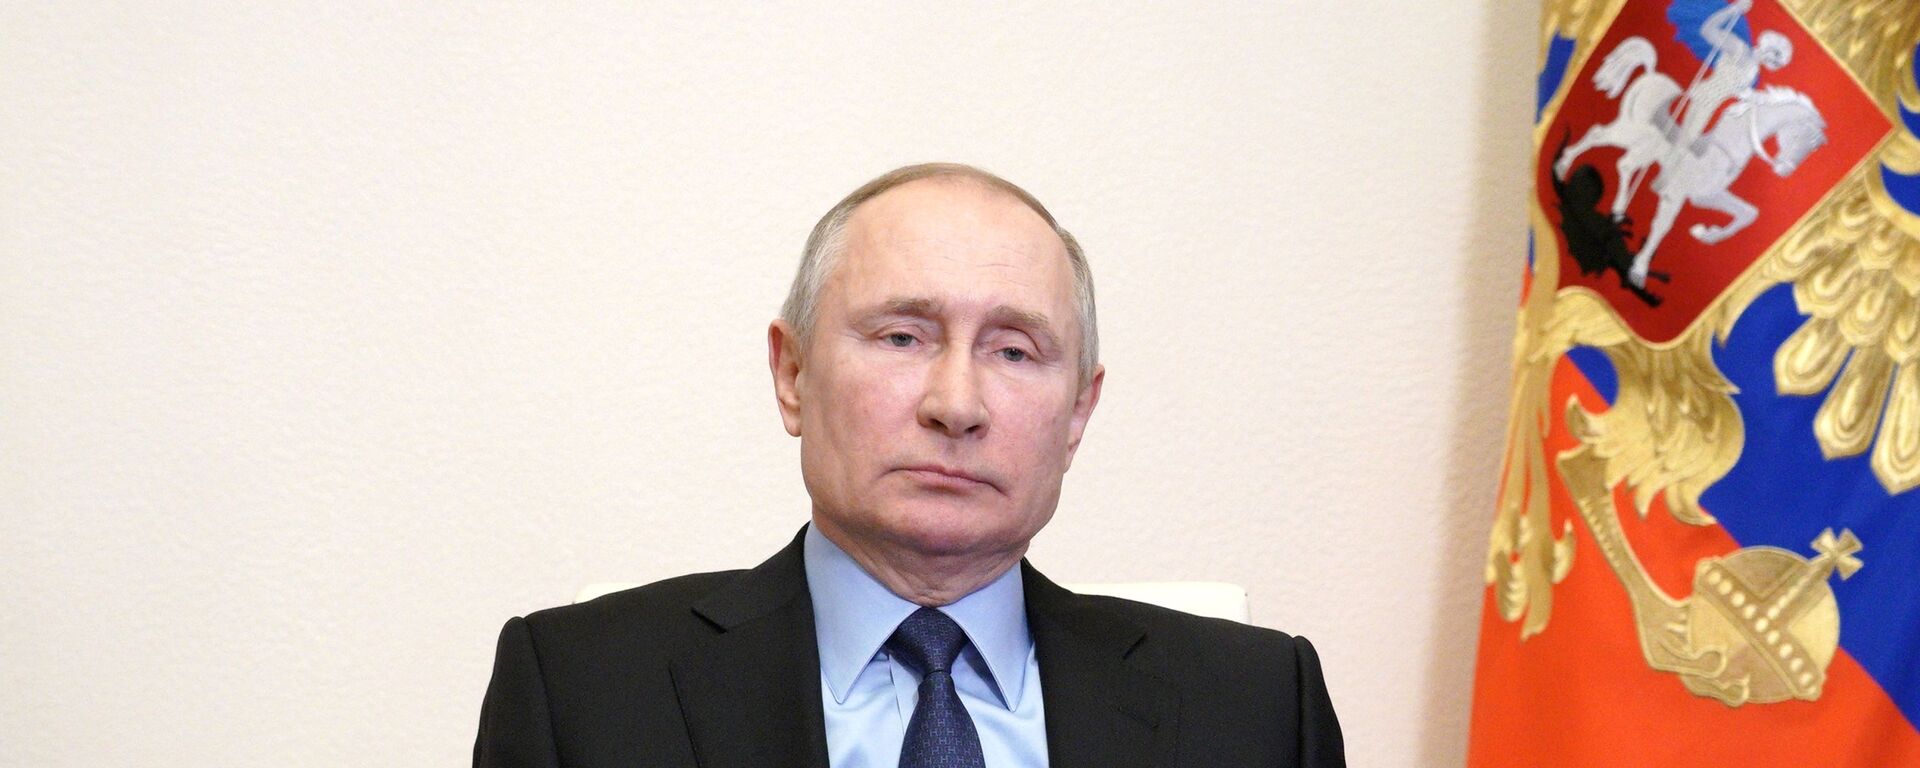 Tổng thống Nga Vladimir Putin. - Sputnik Việt Nam, 1920, 20.12.2021